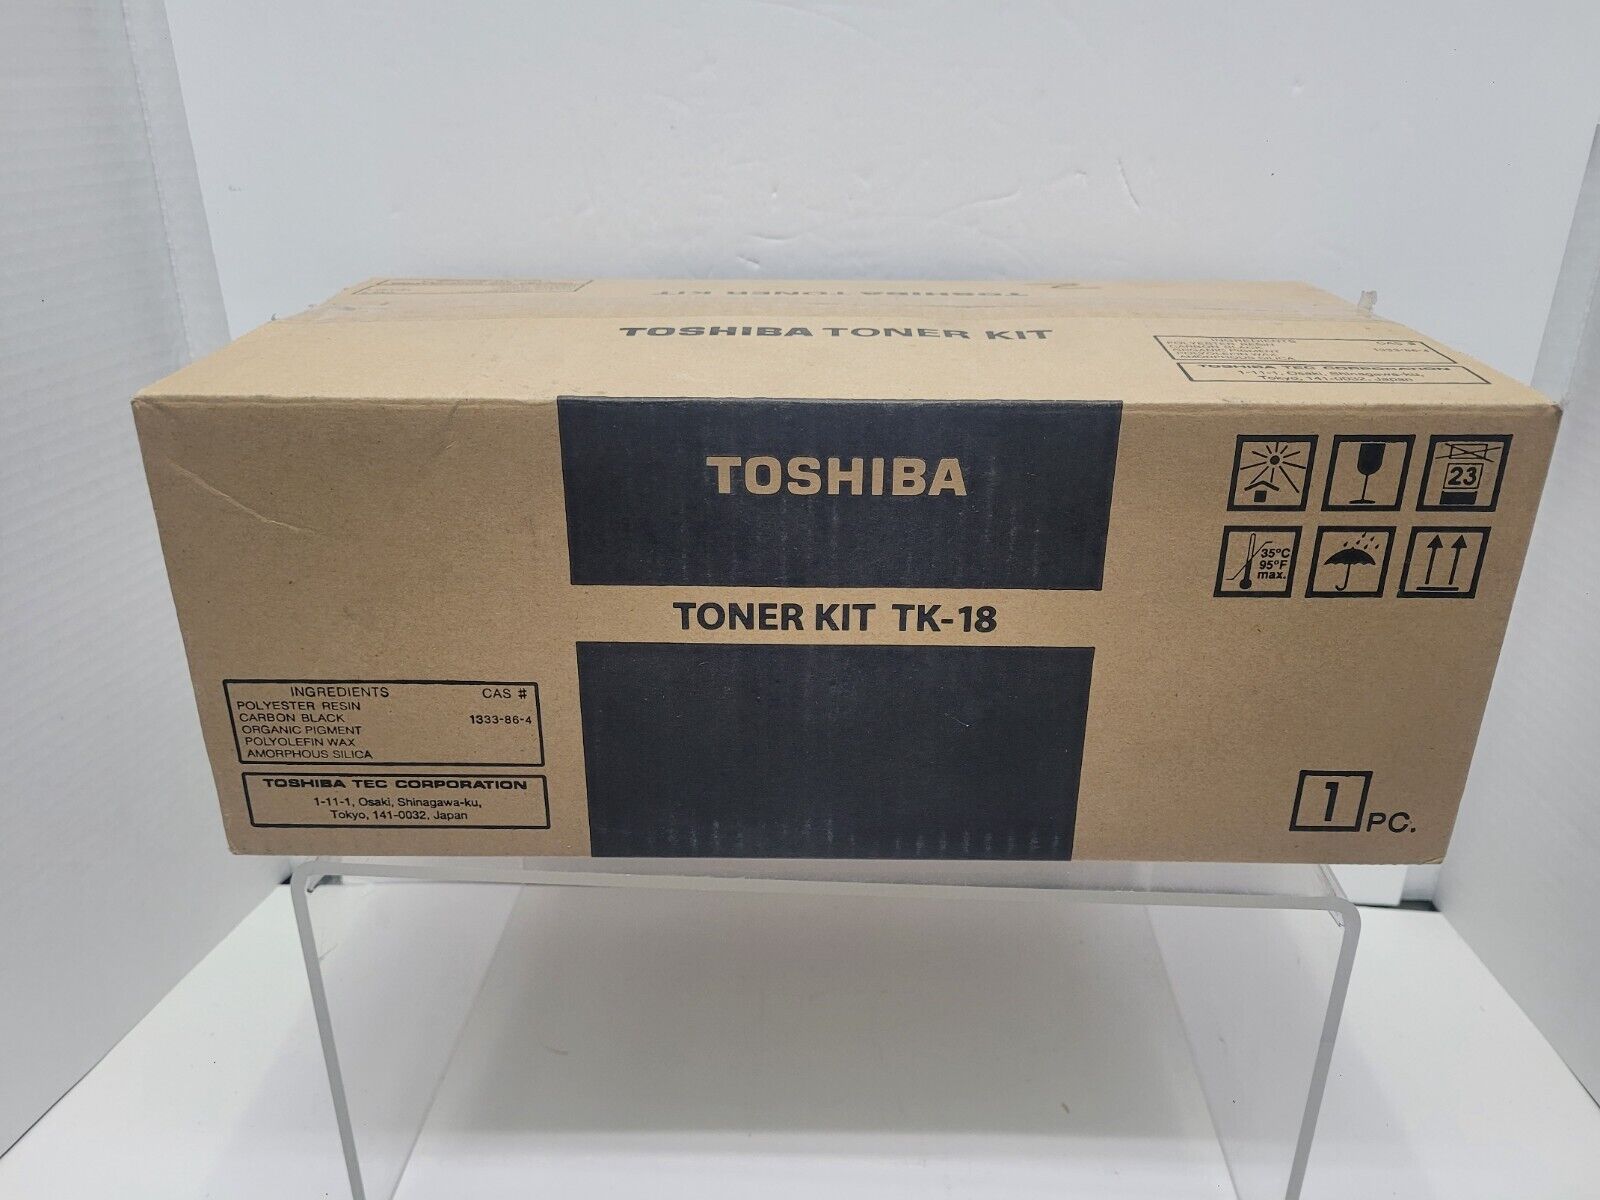 TOSHIBA TONER KIT TK-18/21204099 - TK18 NEW & SEALED